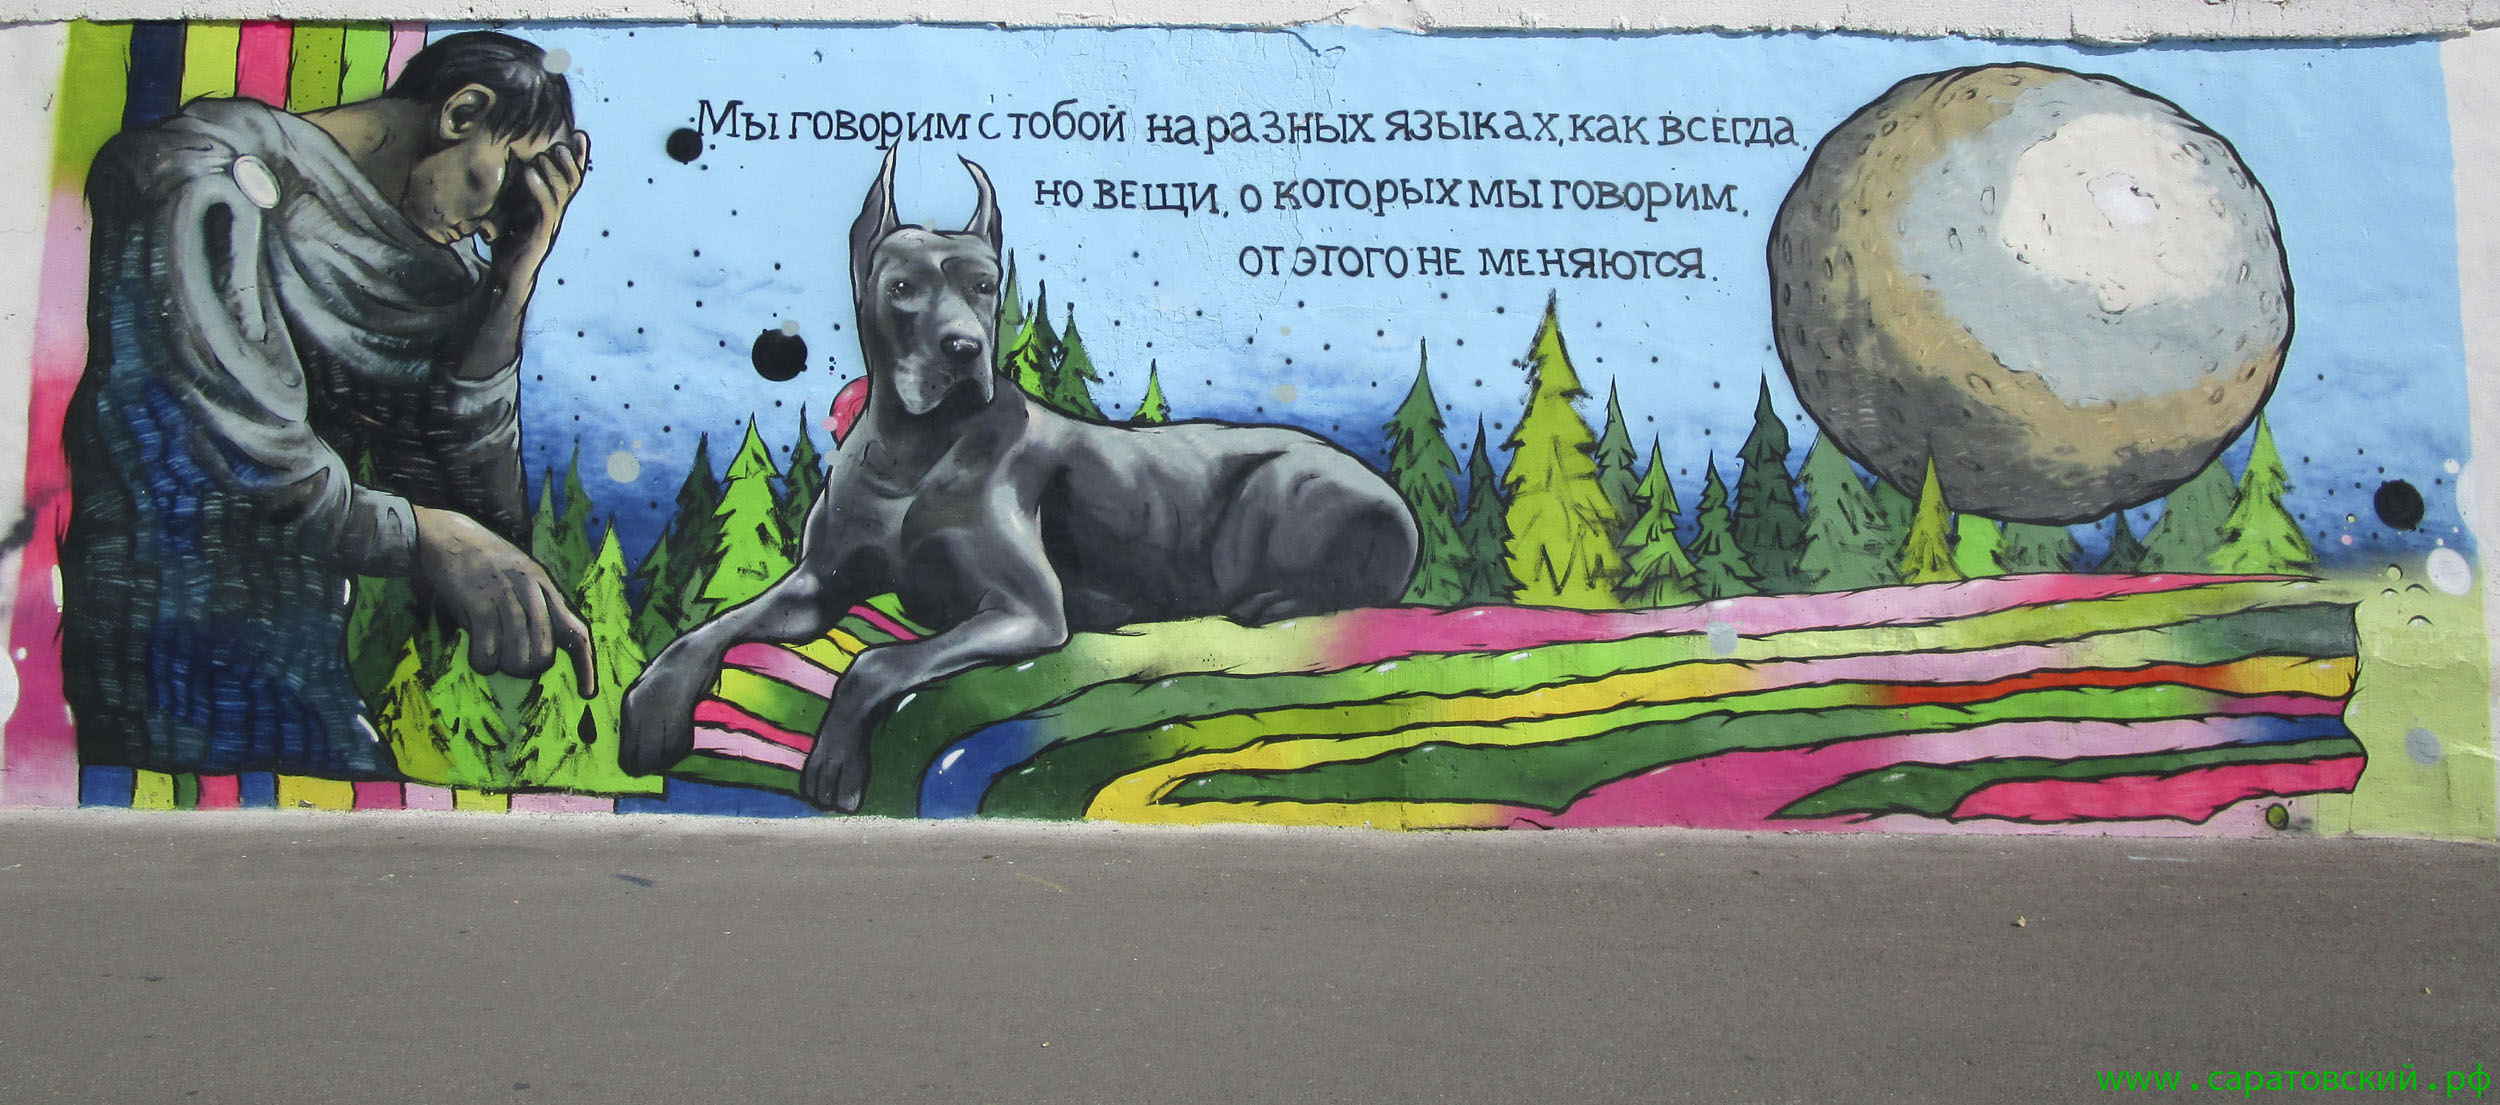 Набережная Космонавтов, граффити: 'Мастер и Маргарита' Булгакова и Саратов